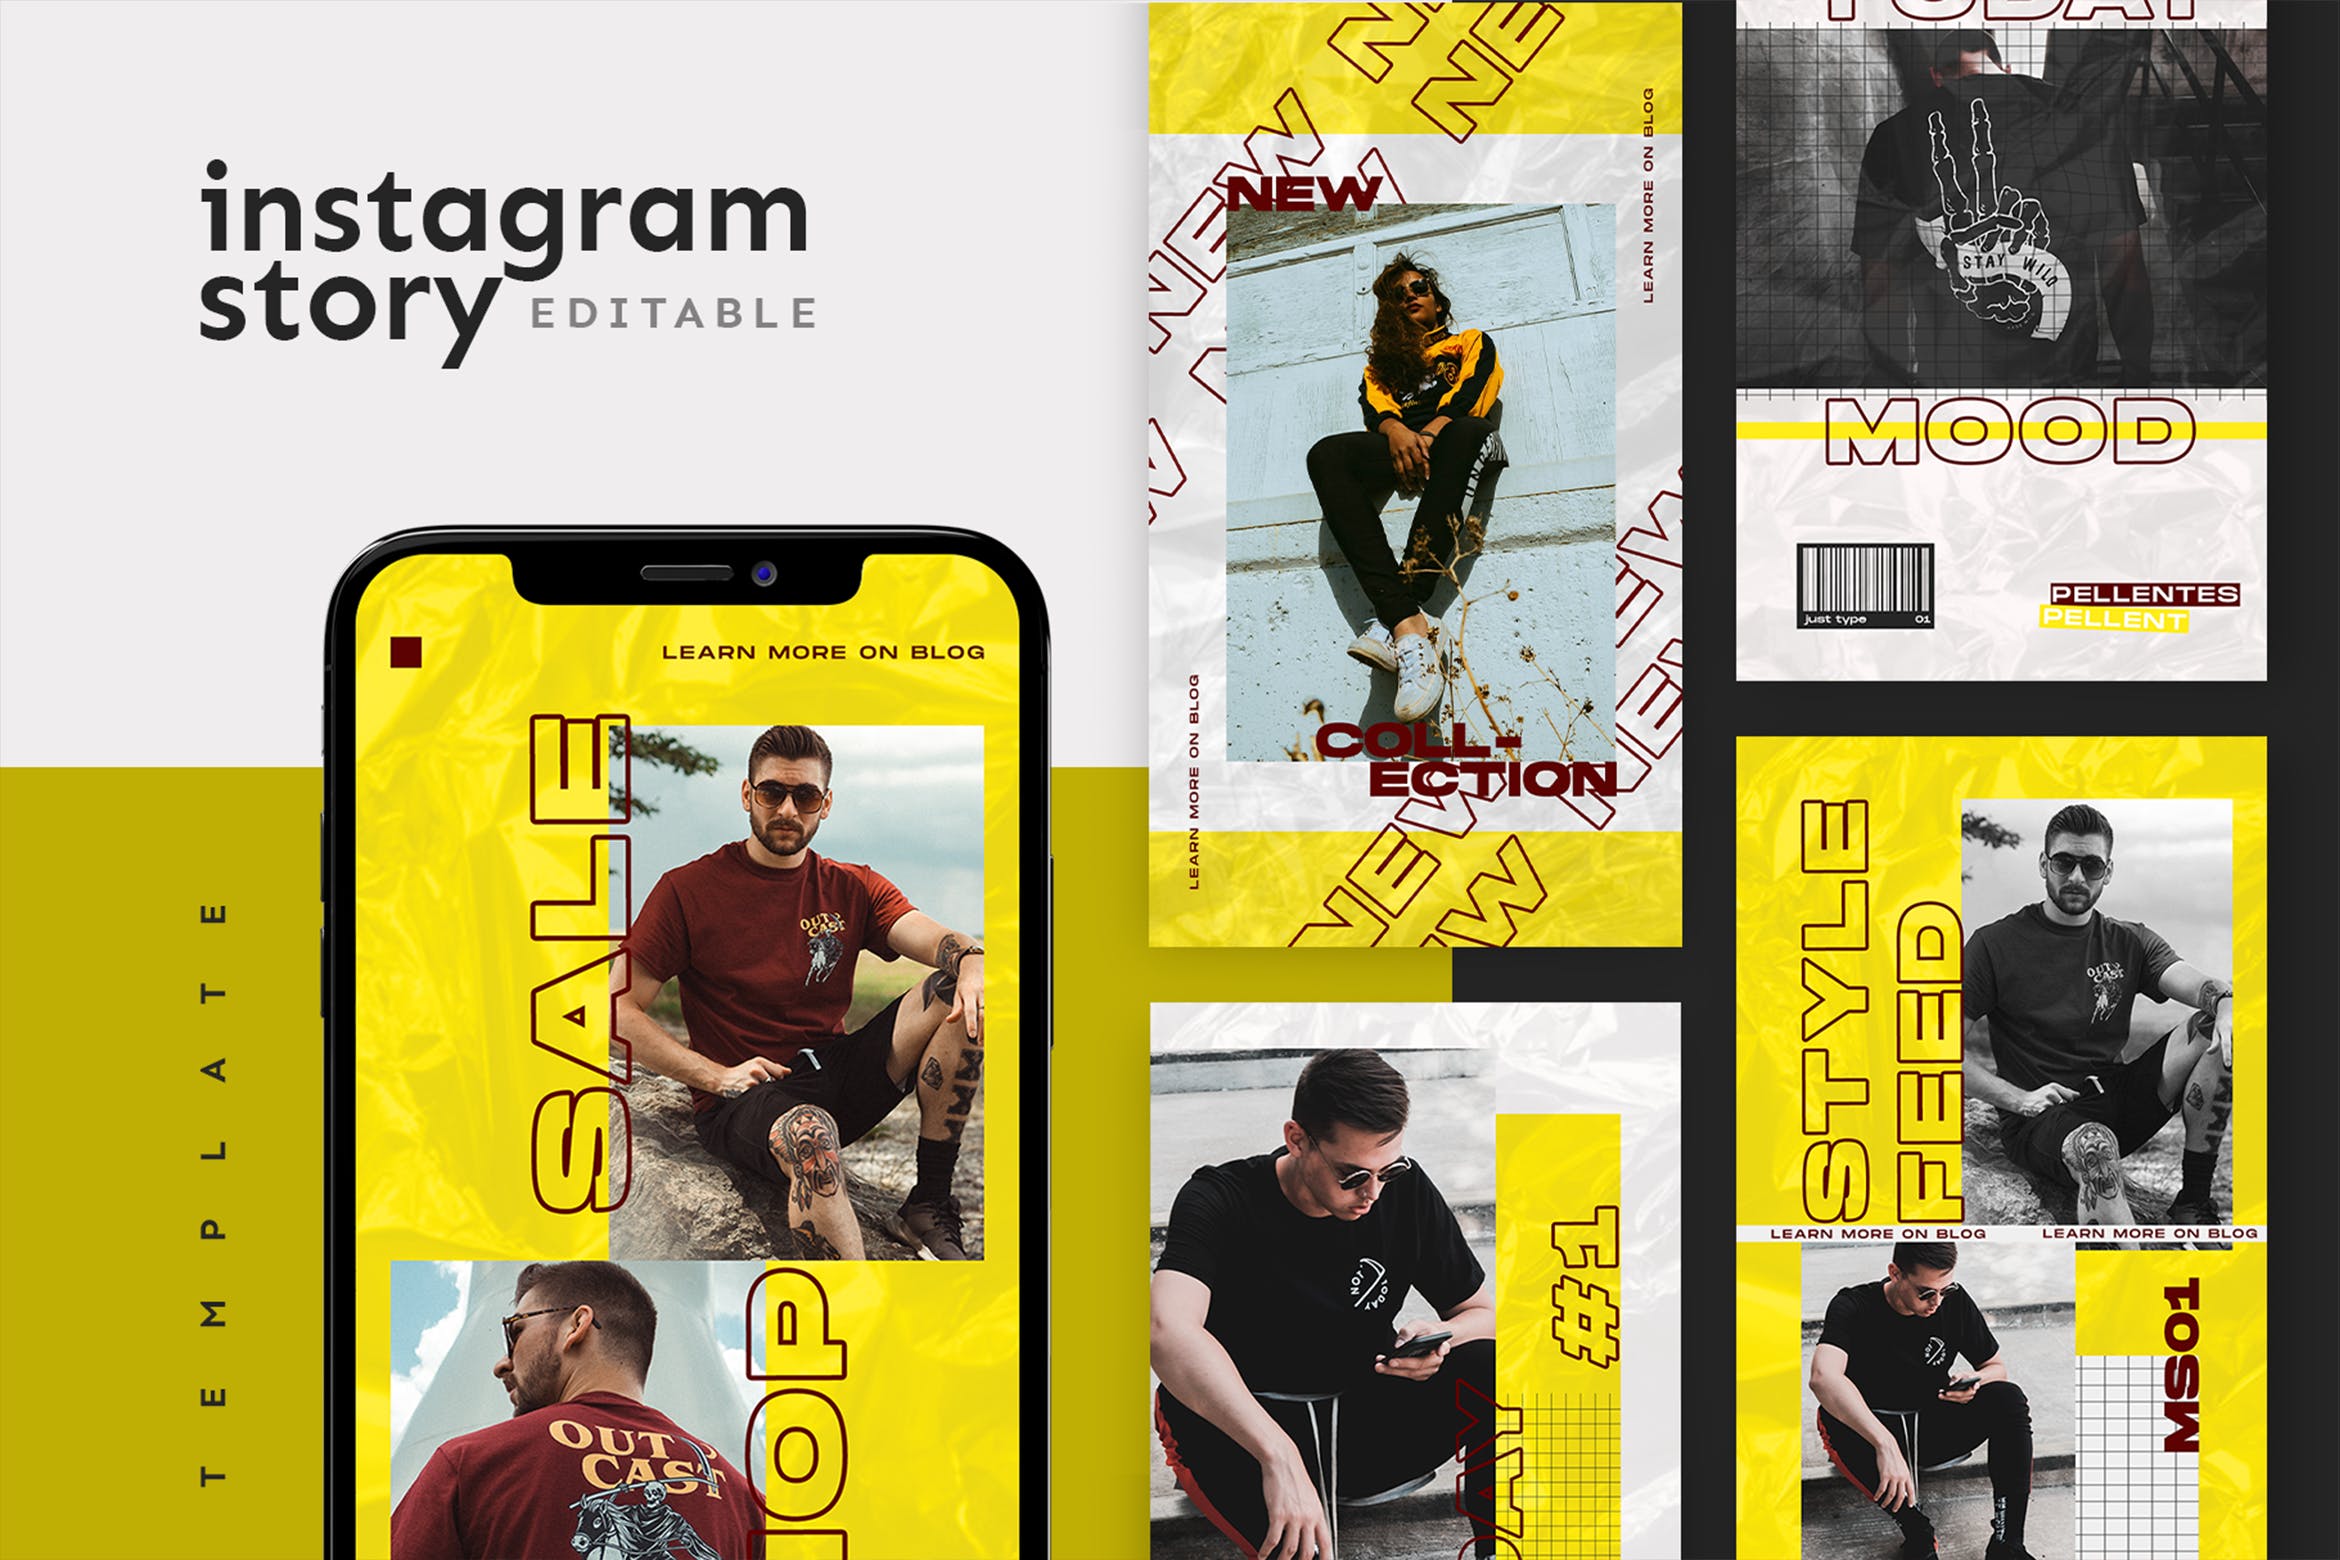 Instagram社交平台品牌故事广告设计模板素材库精选 Instagram Story Template插图